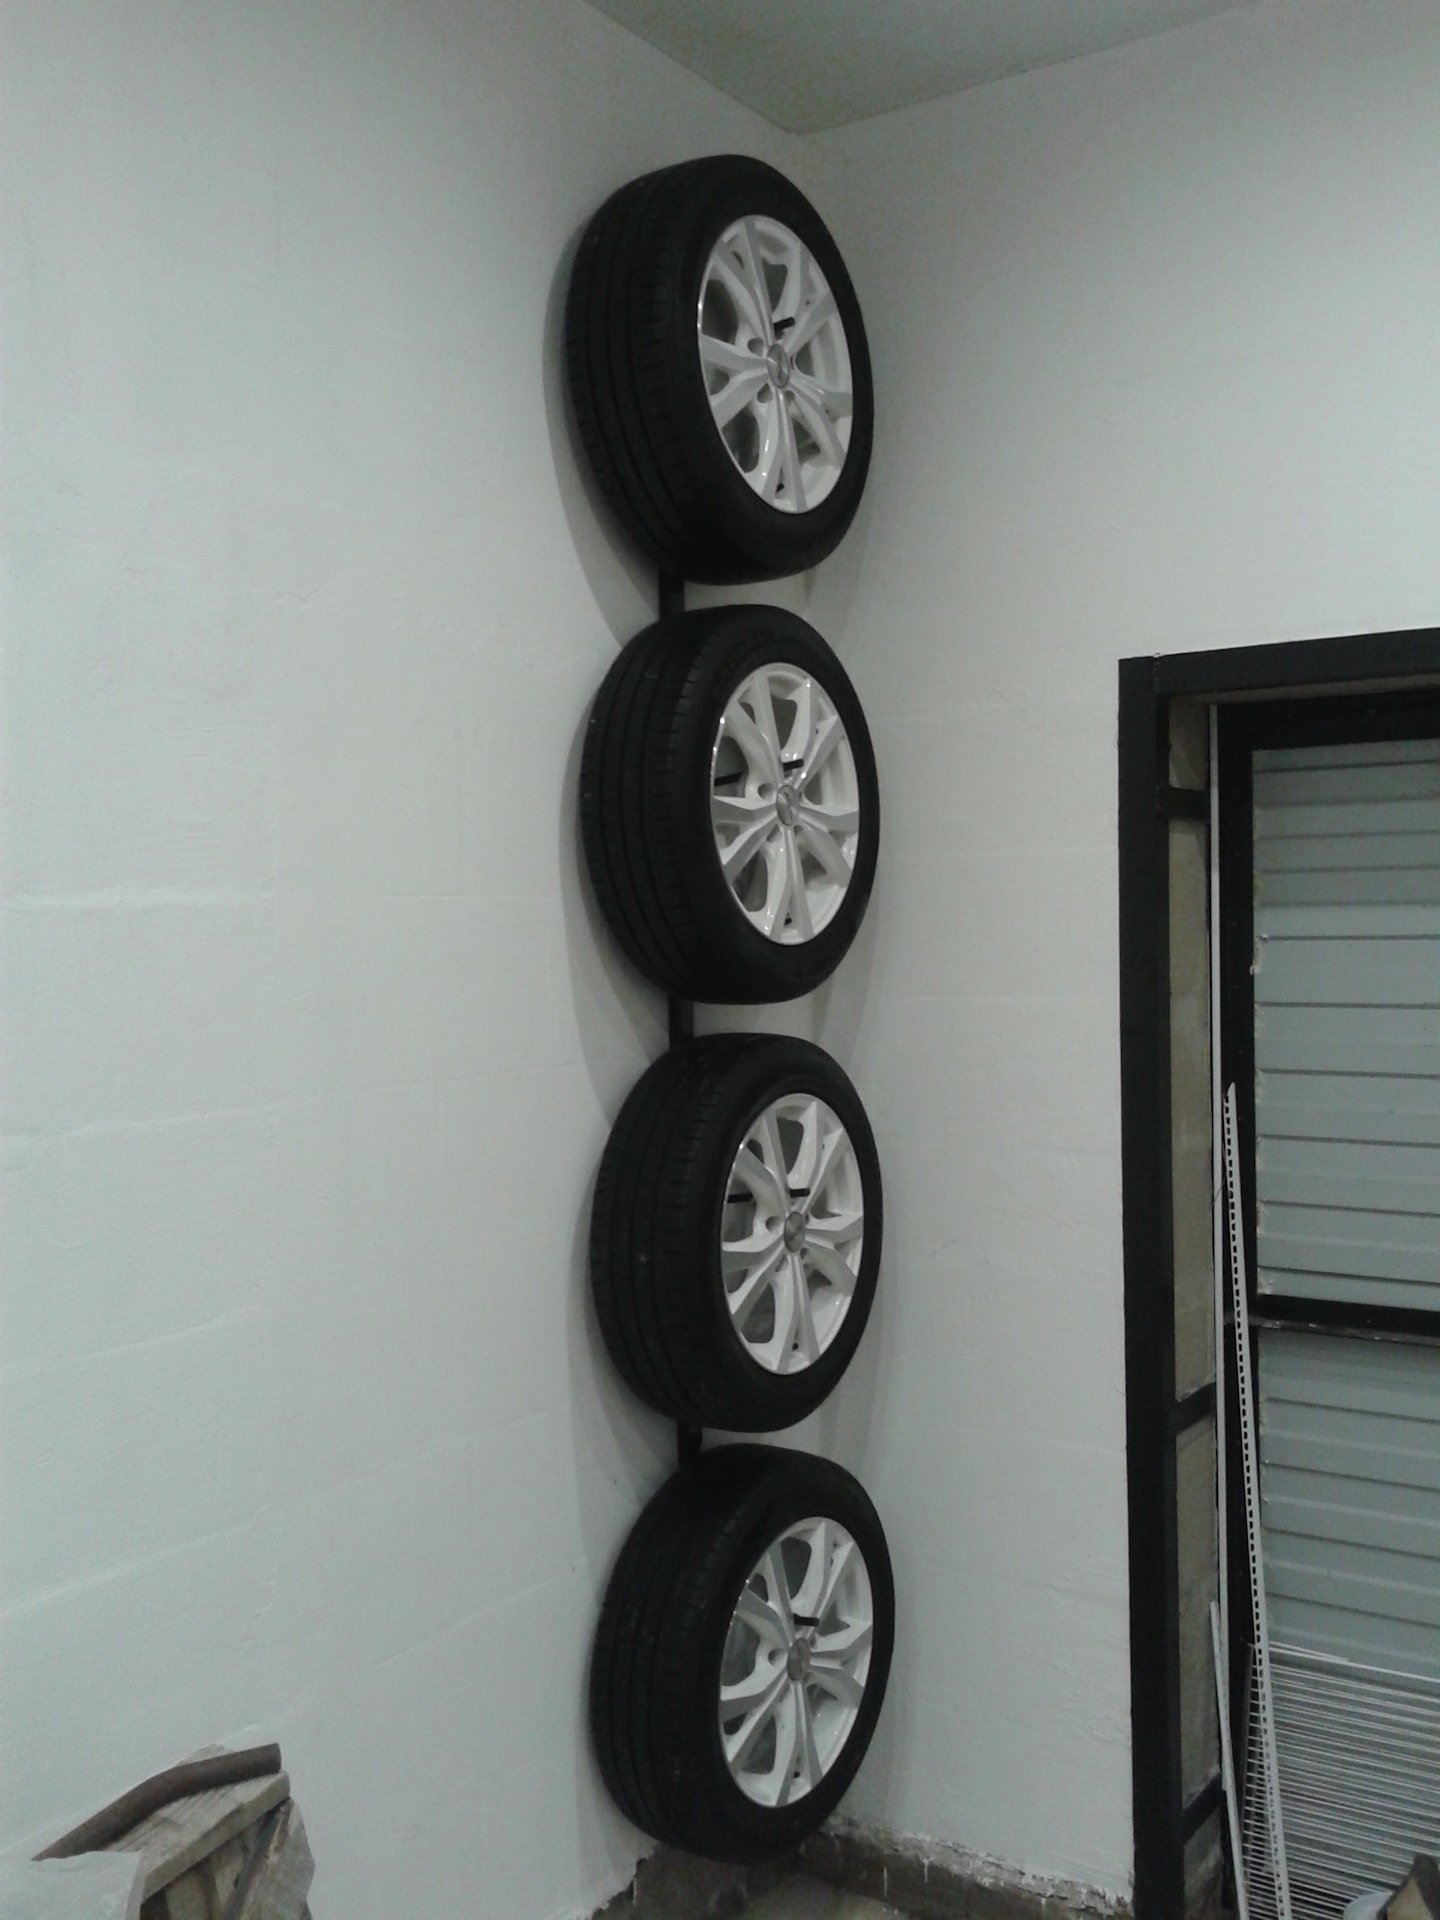 Кронштейн для колес на стену. Полка для автомобильных колес. Кронштейн для хранения колес в гараже. Стеллаж для колес в гараж. Полки для хранения колес в гараже.